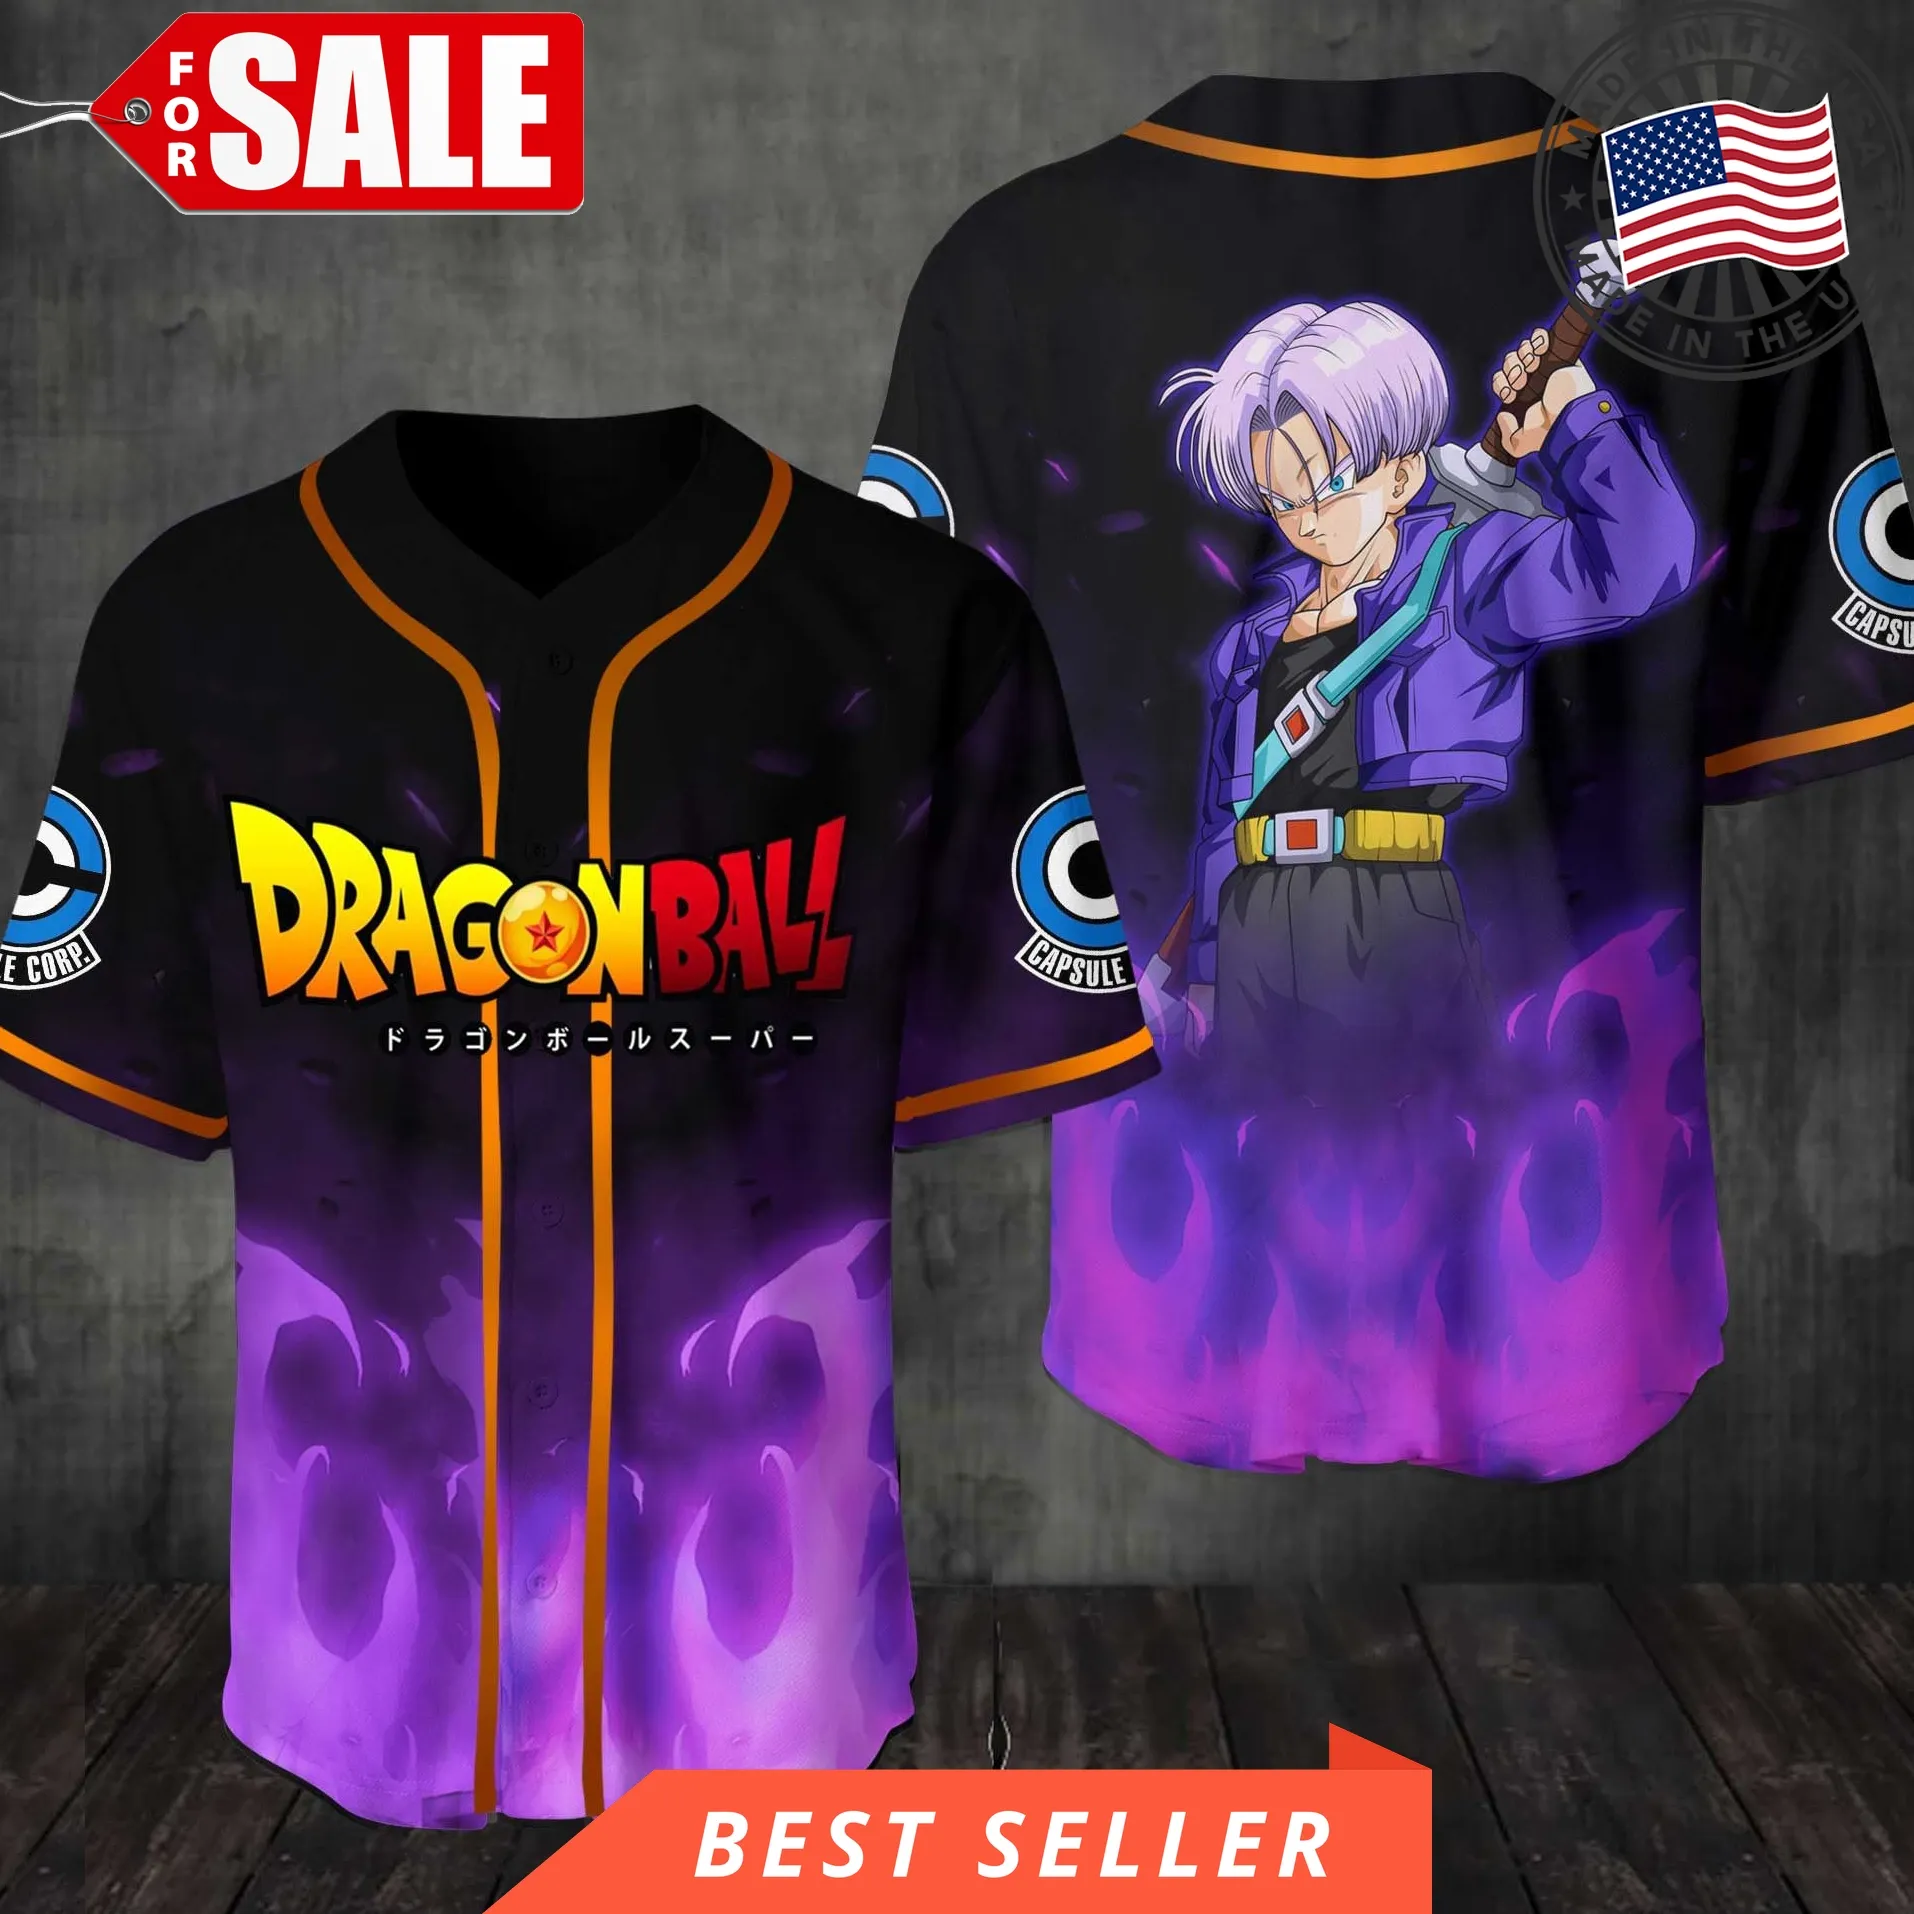 Dragon Ball Trunks Baseball Jersey Shirt